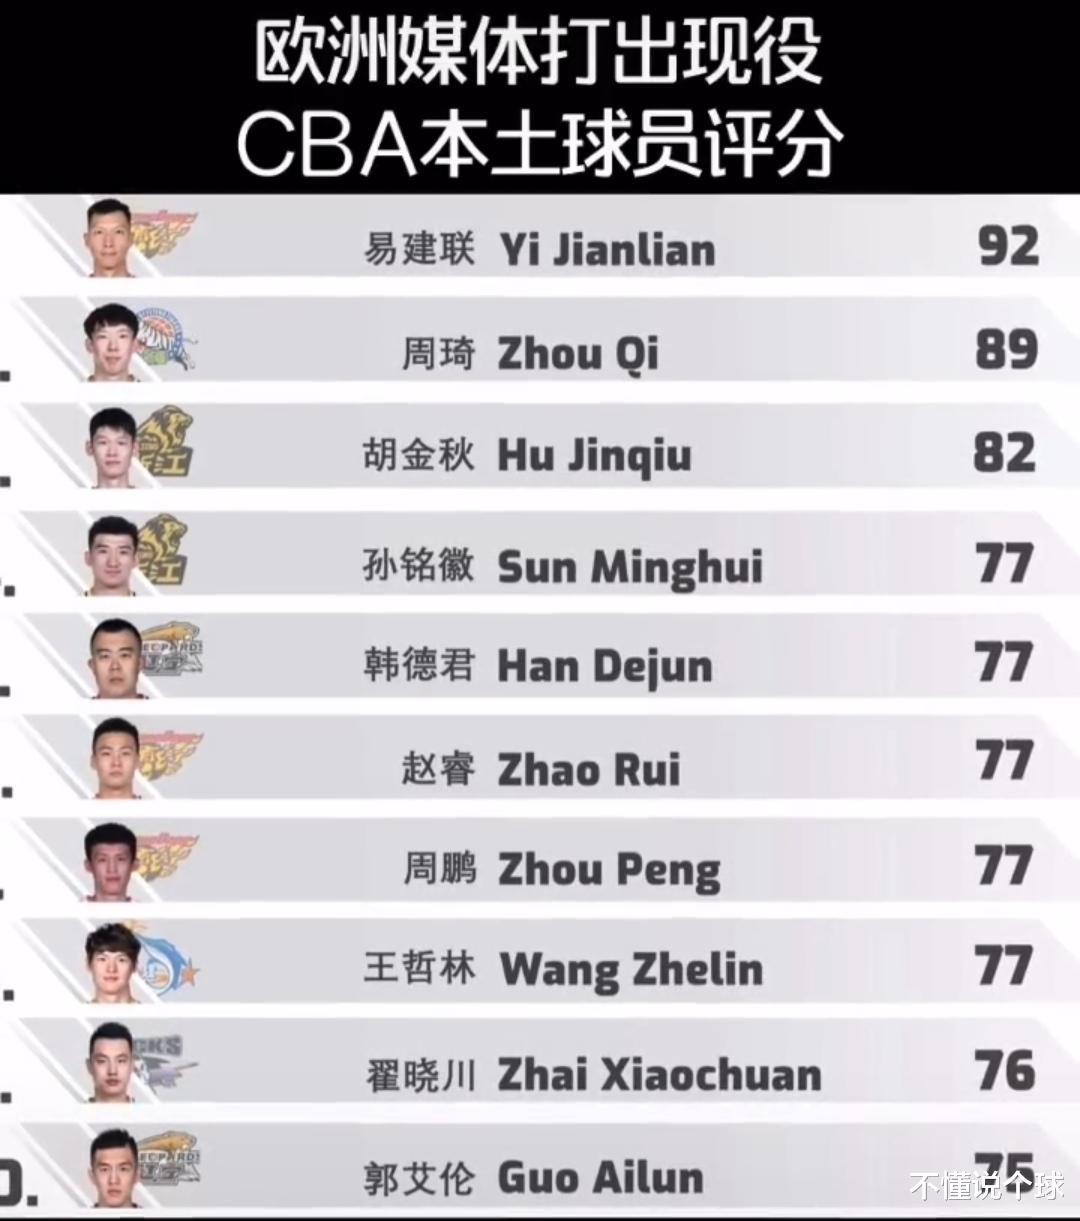 CBA本土球员评分，郭艾伦排第十不如孙铭徽和赵睿，球迷表示不服(1)